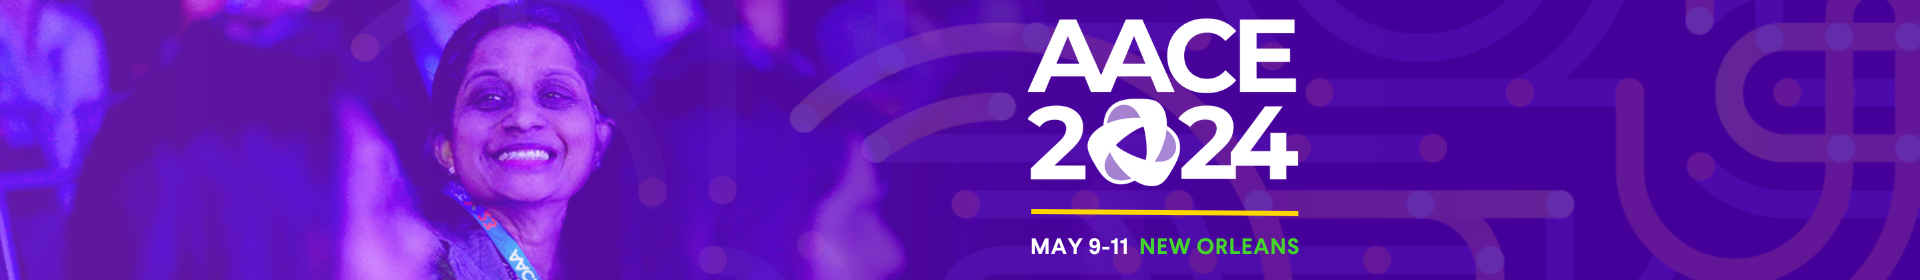 AACE 2024 Annual Meeting Scorecard Event Banner